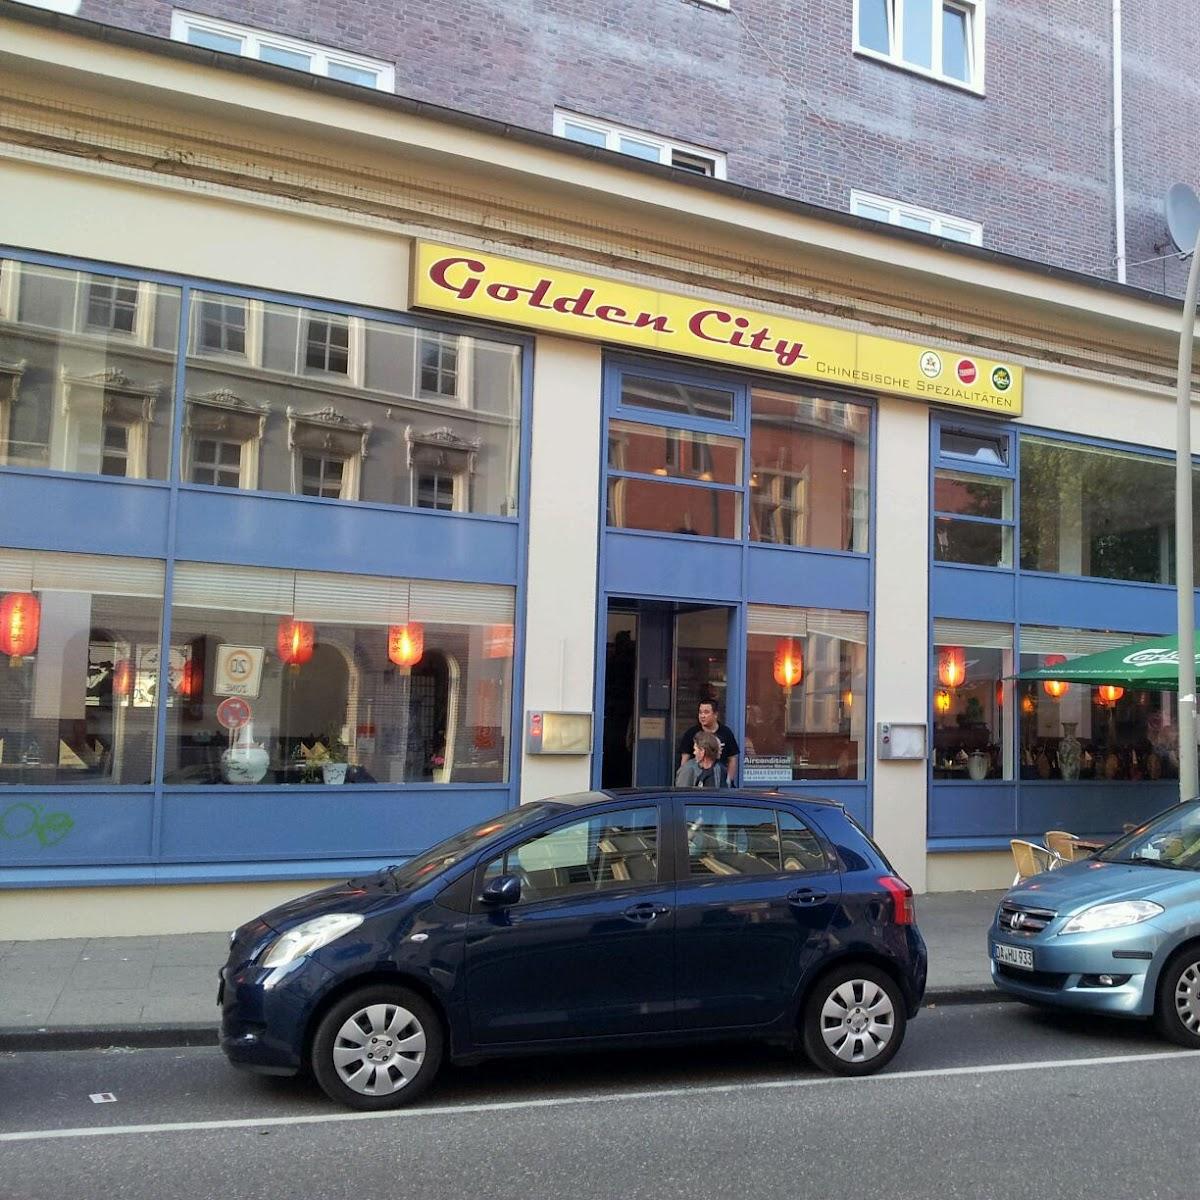 Restaurant "China Restaurant Golden City" in Hamburg